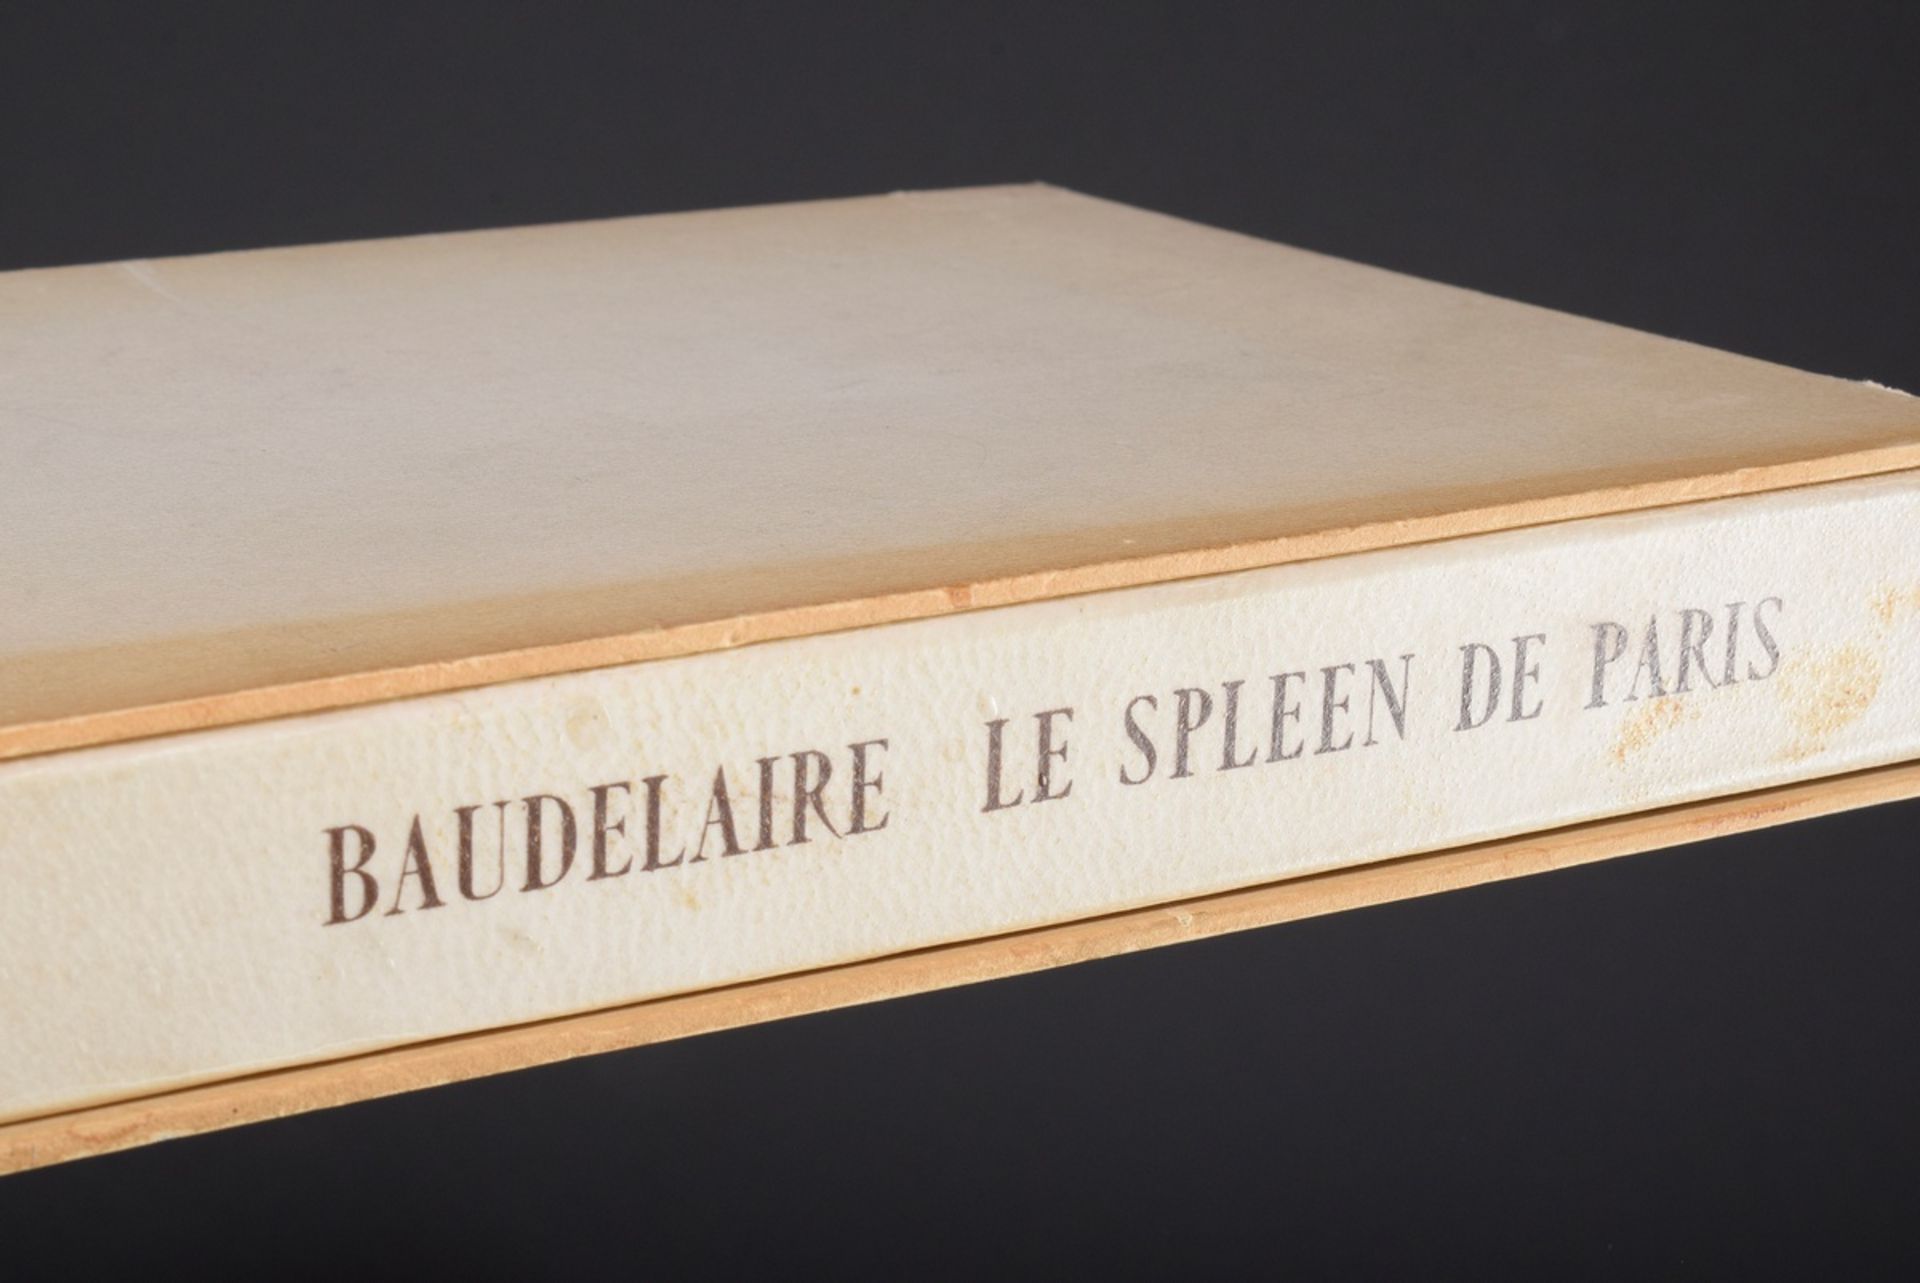 Band Charles-Pierre Baudelaire "Le Spleen du Par | Volume Charles-Pierre Baudelaire "Le Spleen du P - Image 6 of 6